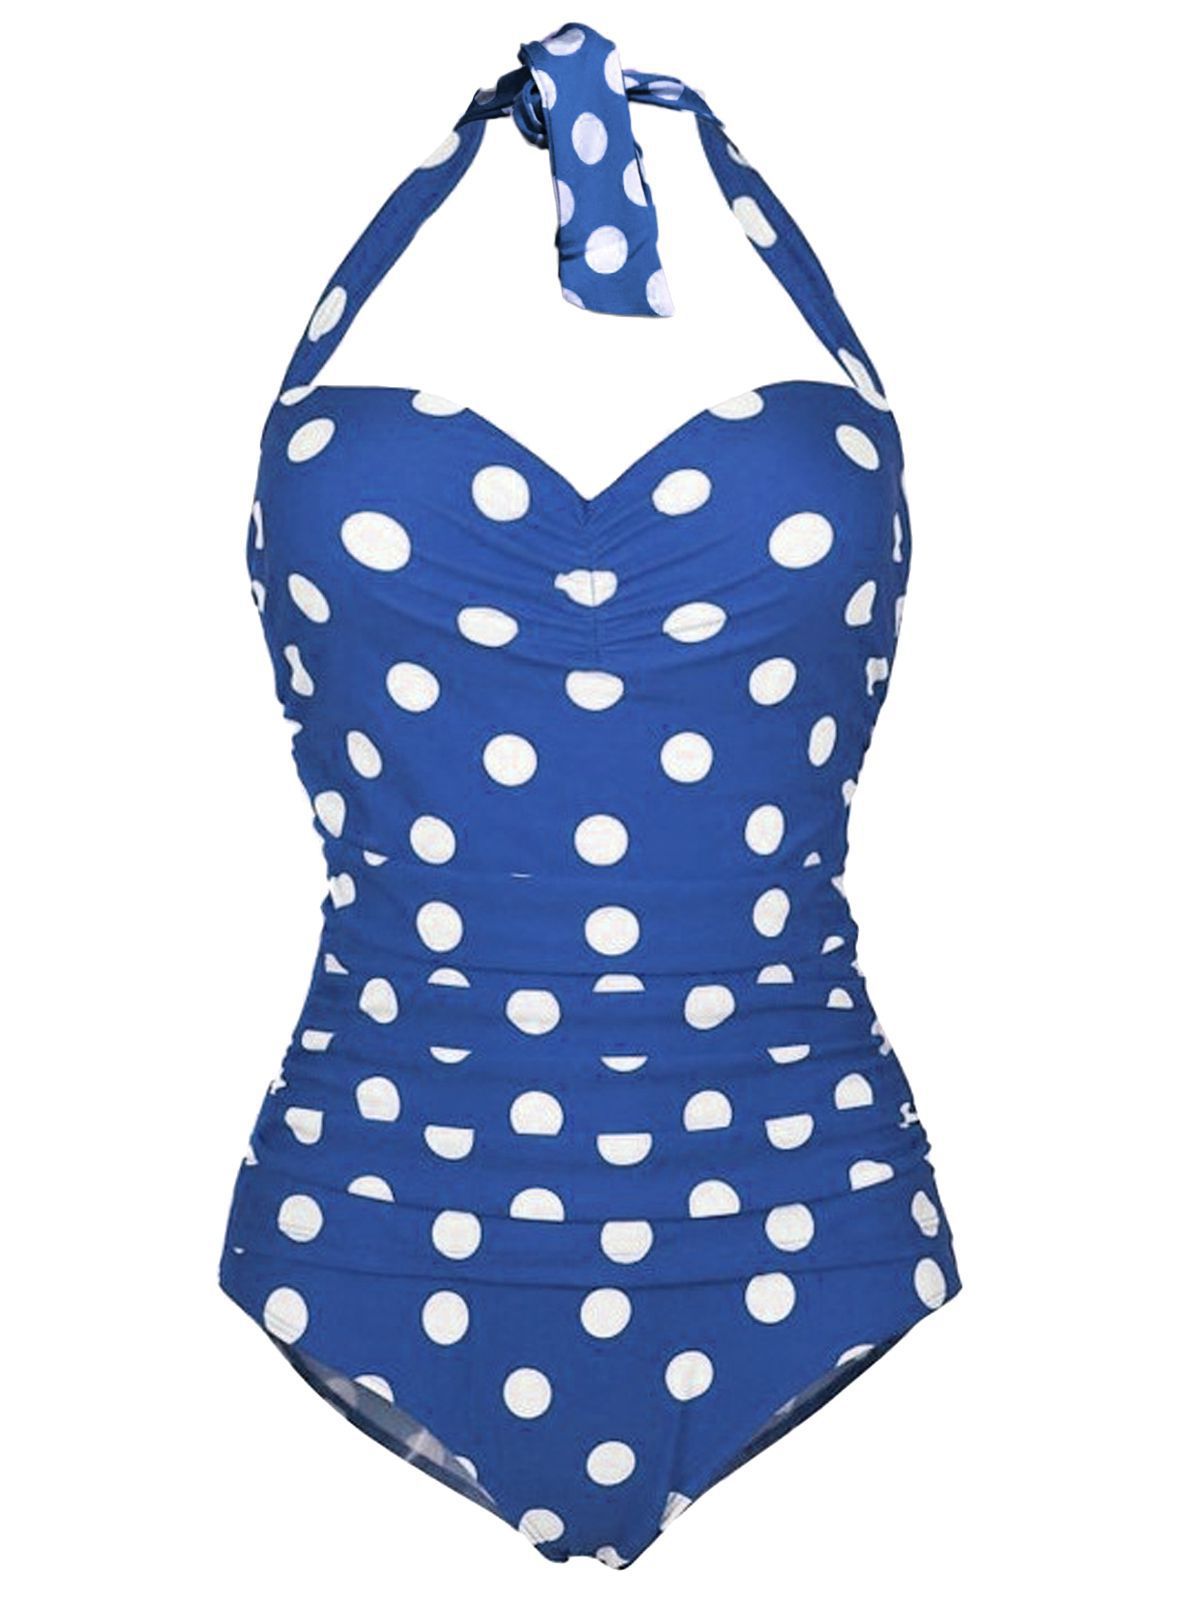 Upopby Halter Polka Dot blue One-Piece Swimsuit